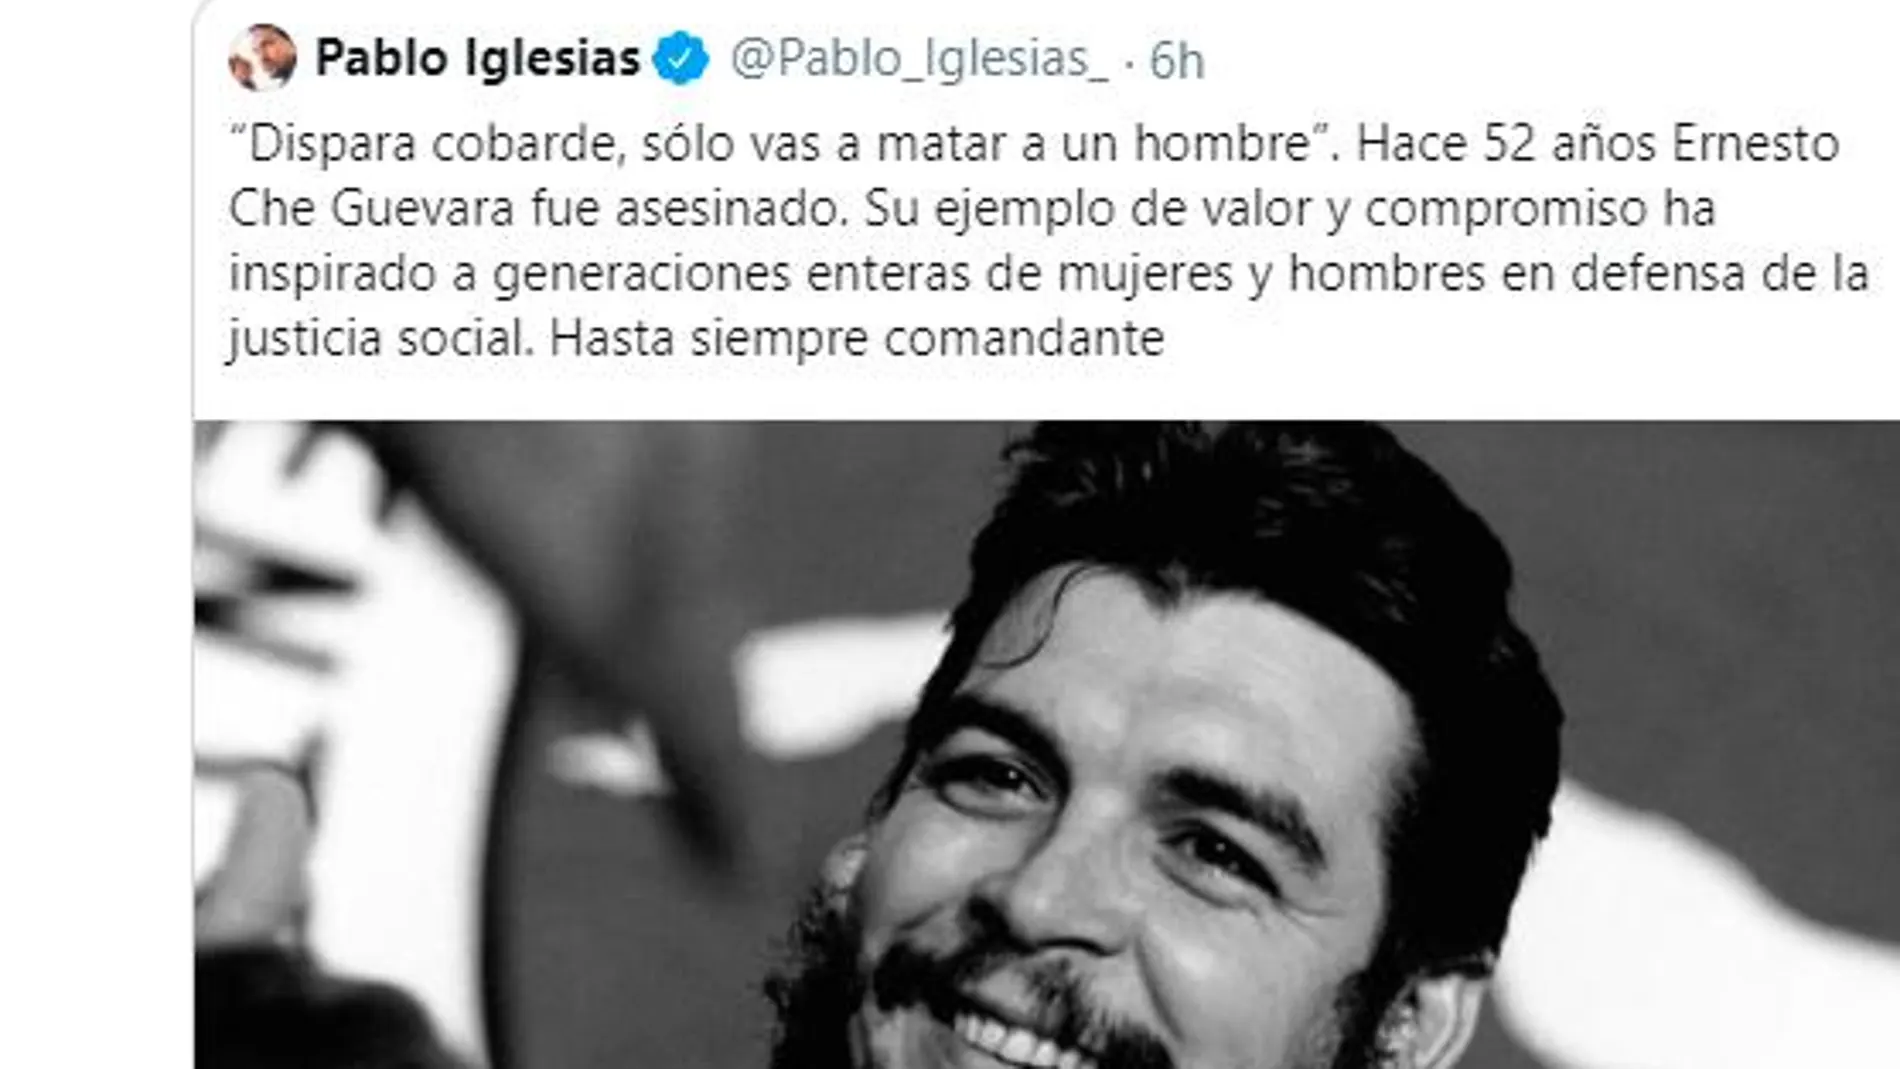 Santiago Abascal da una clase de historia en Twitter a Pablo Iglesias